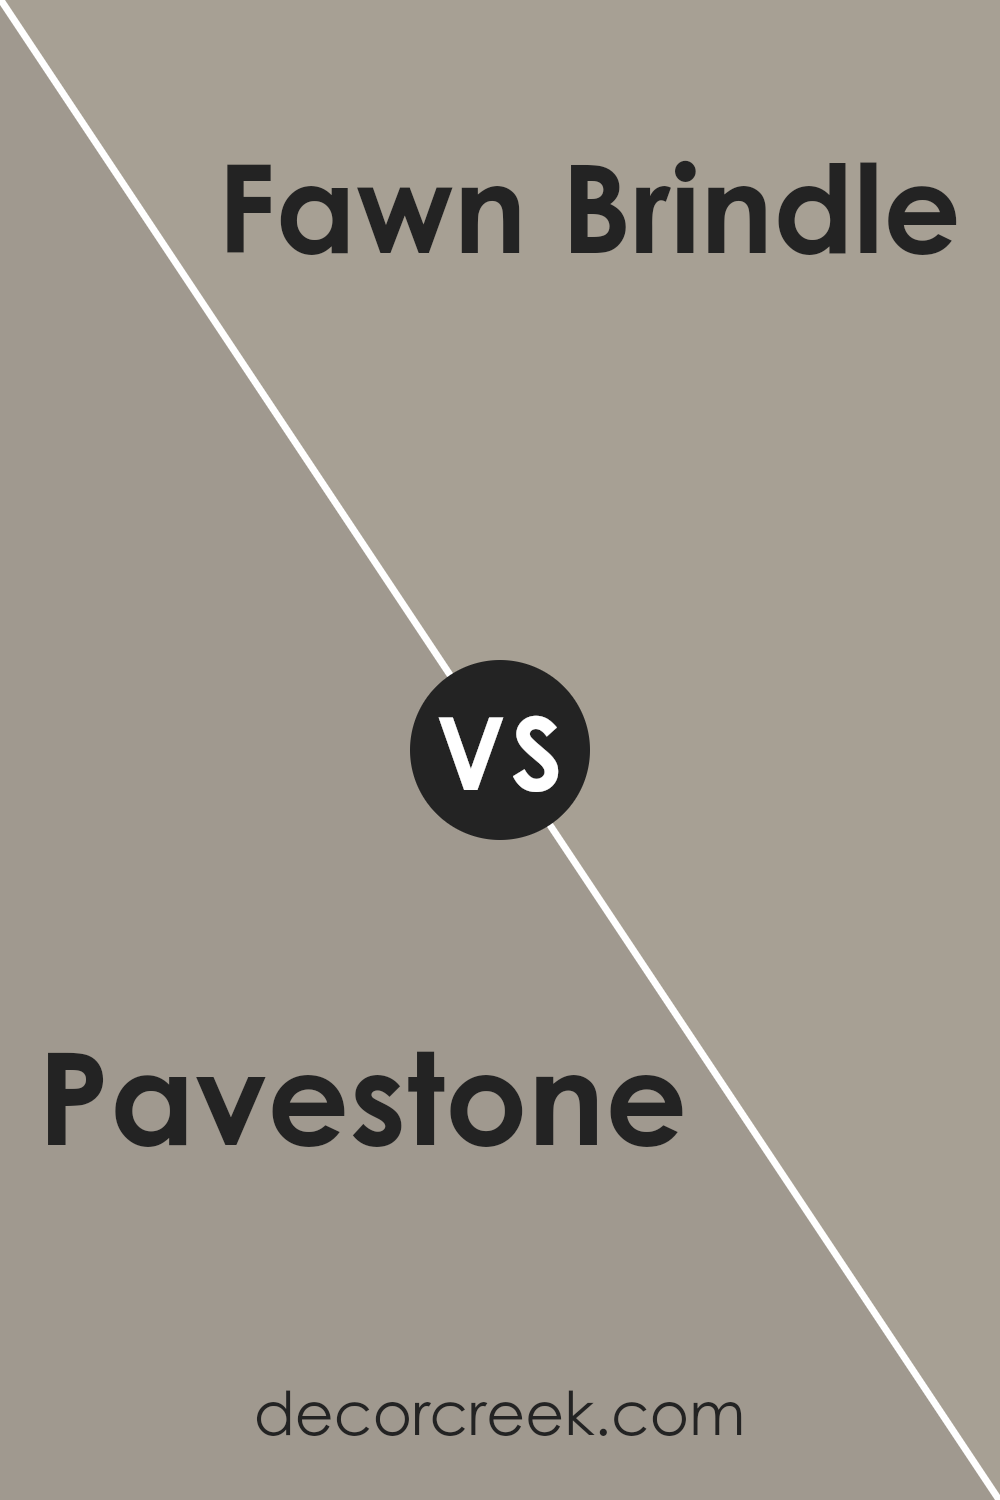 pavestone_sw_7642_vs_fawn_brindle_sw_7640